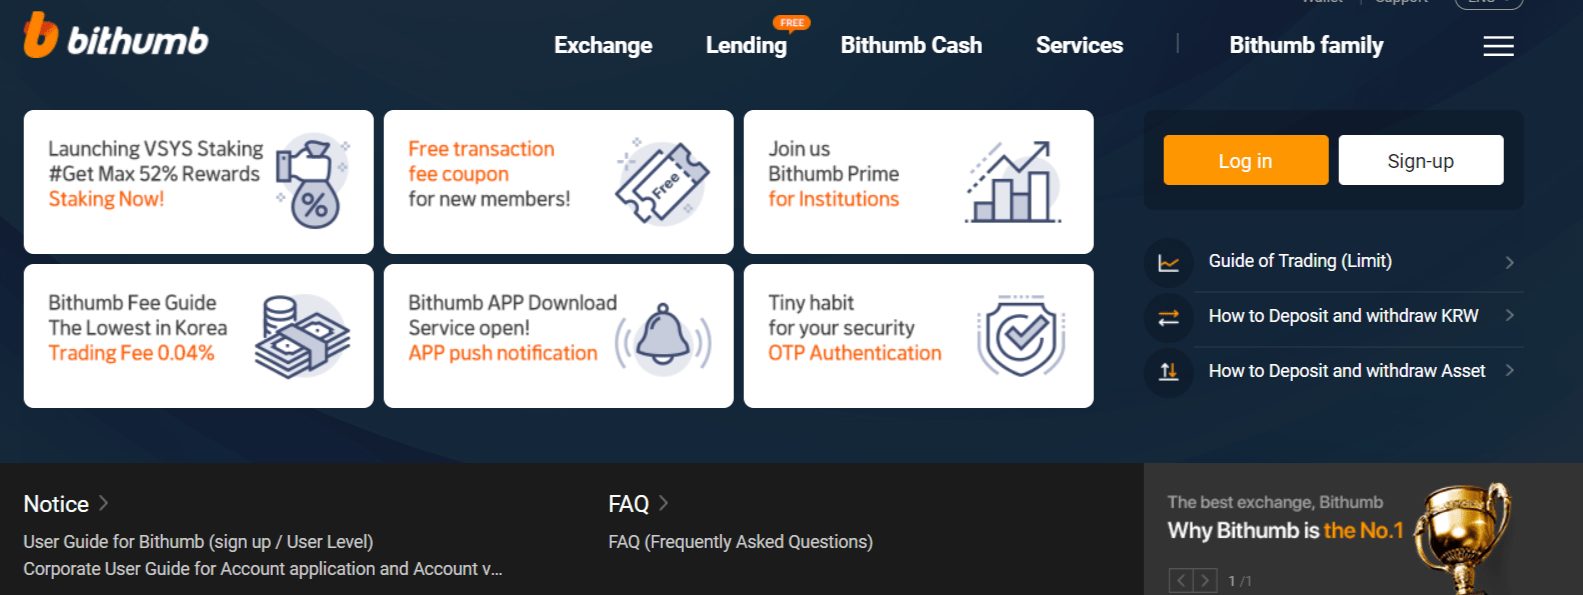 Bithumb Cryptocurrency Exchange Review - No.1 Digital Asset Platform